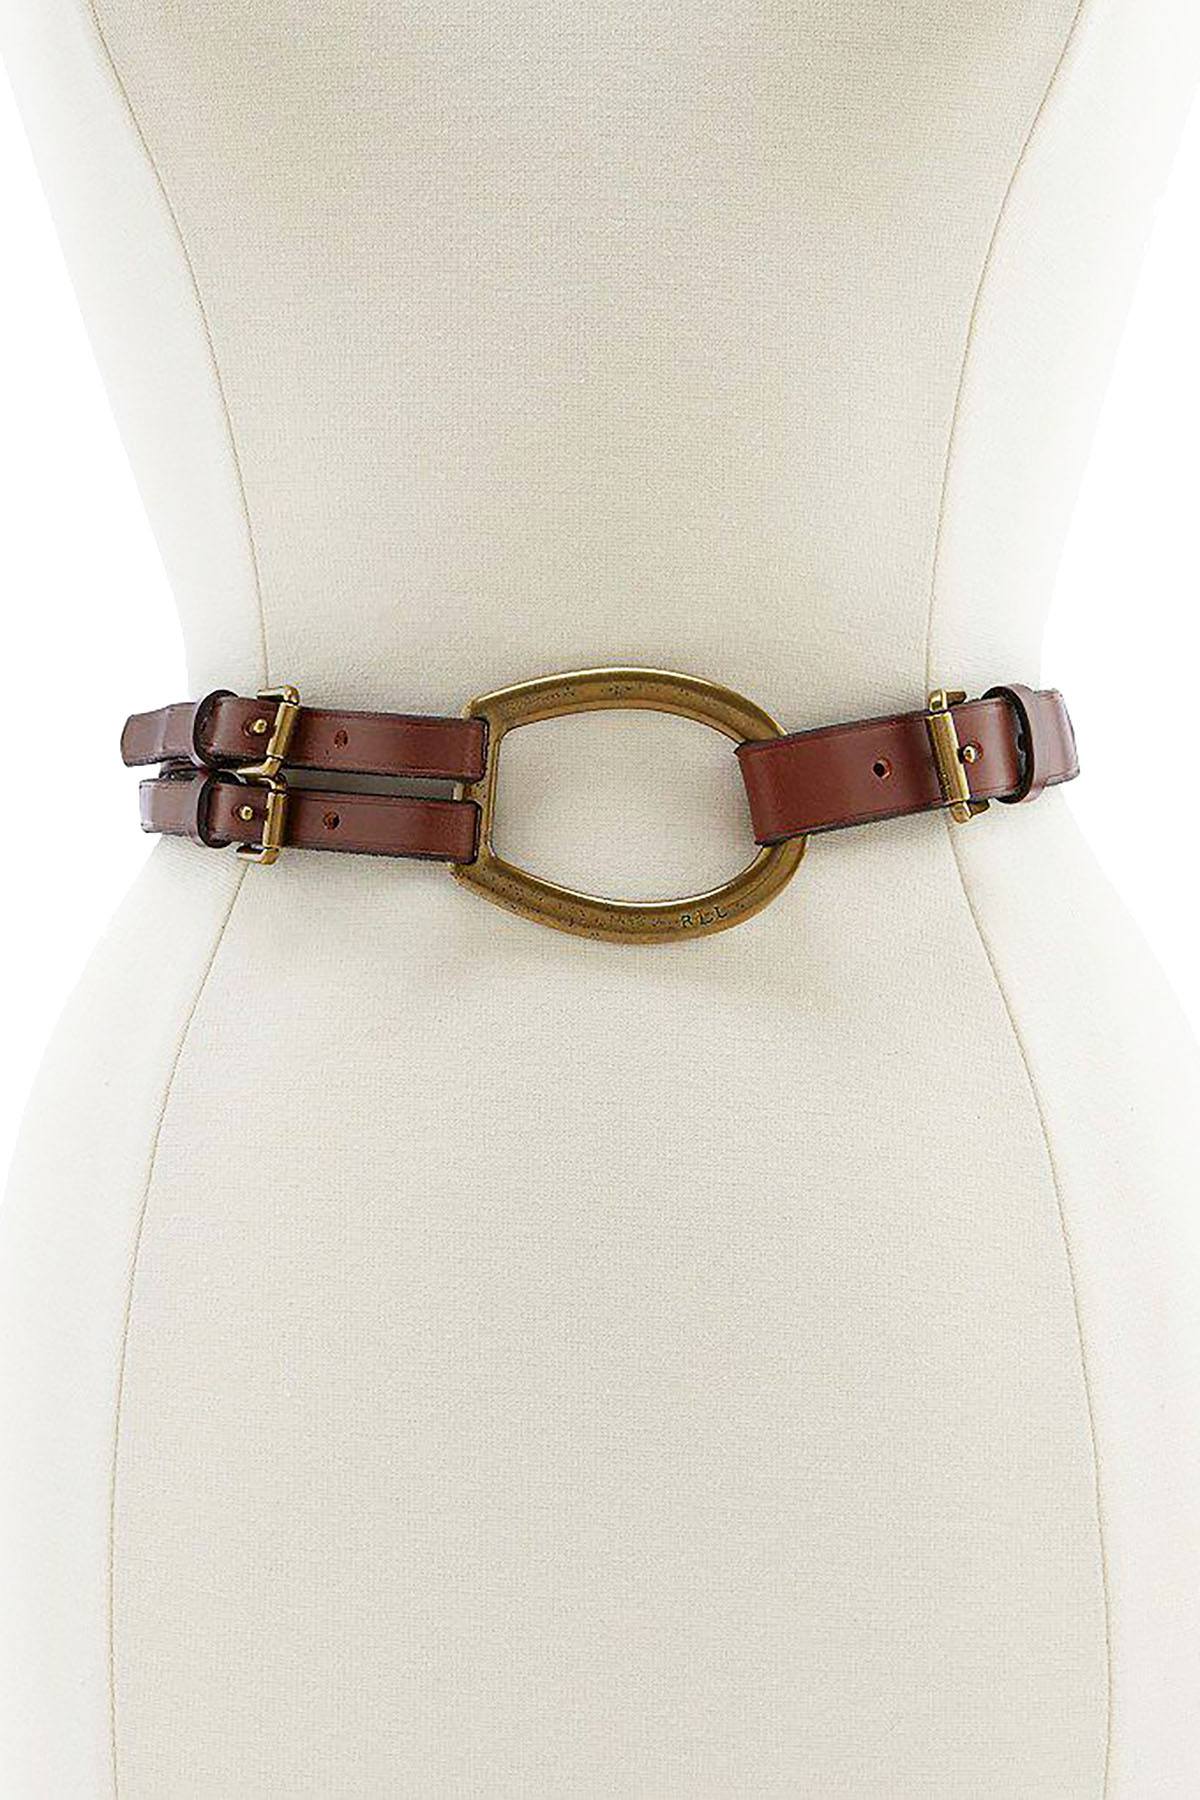 Lauren Ralph Lauren Tan Vachetta Tri-Strap Leather Belt